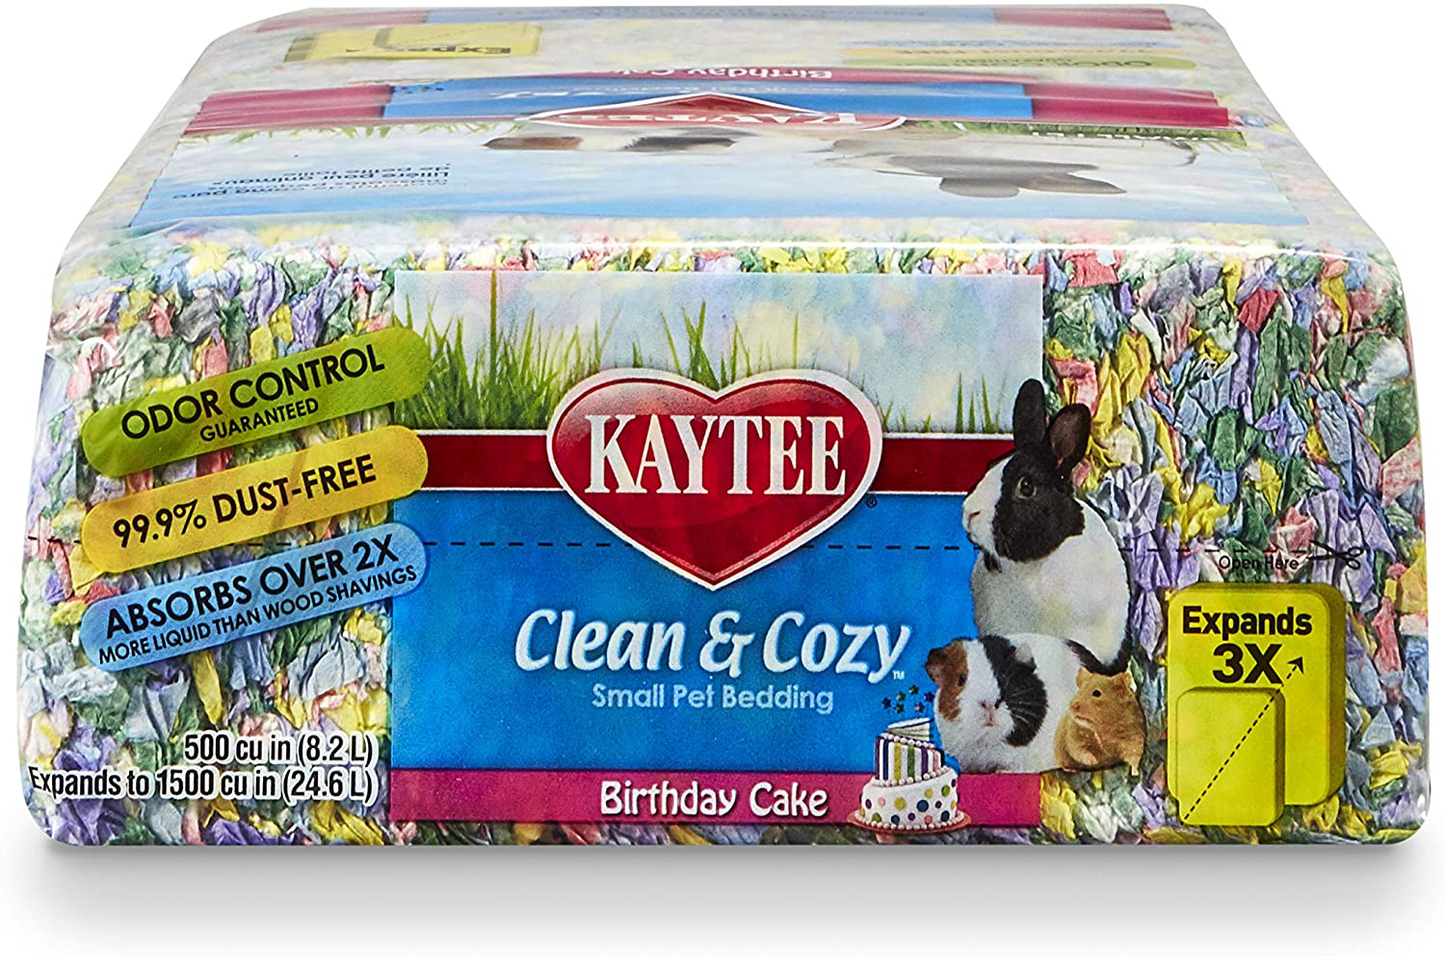 Kaytee Clean & Cozy Birthday Cake Small Pet Bedding 24.6 Liters